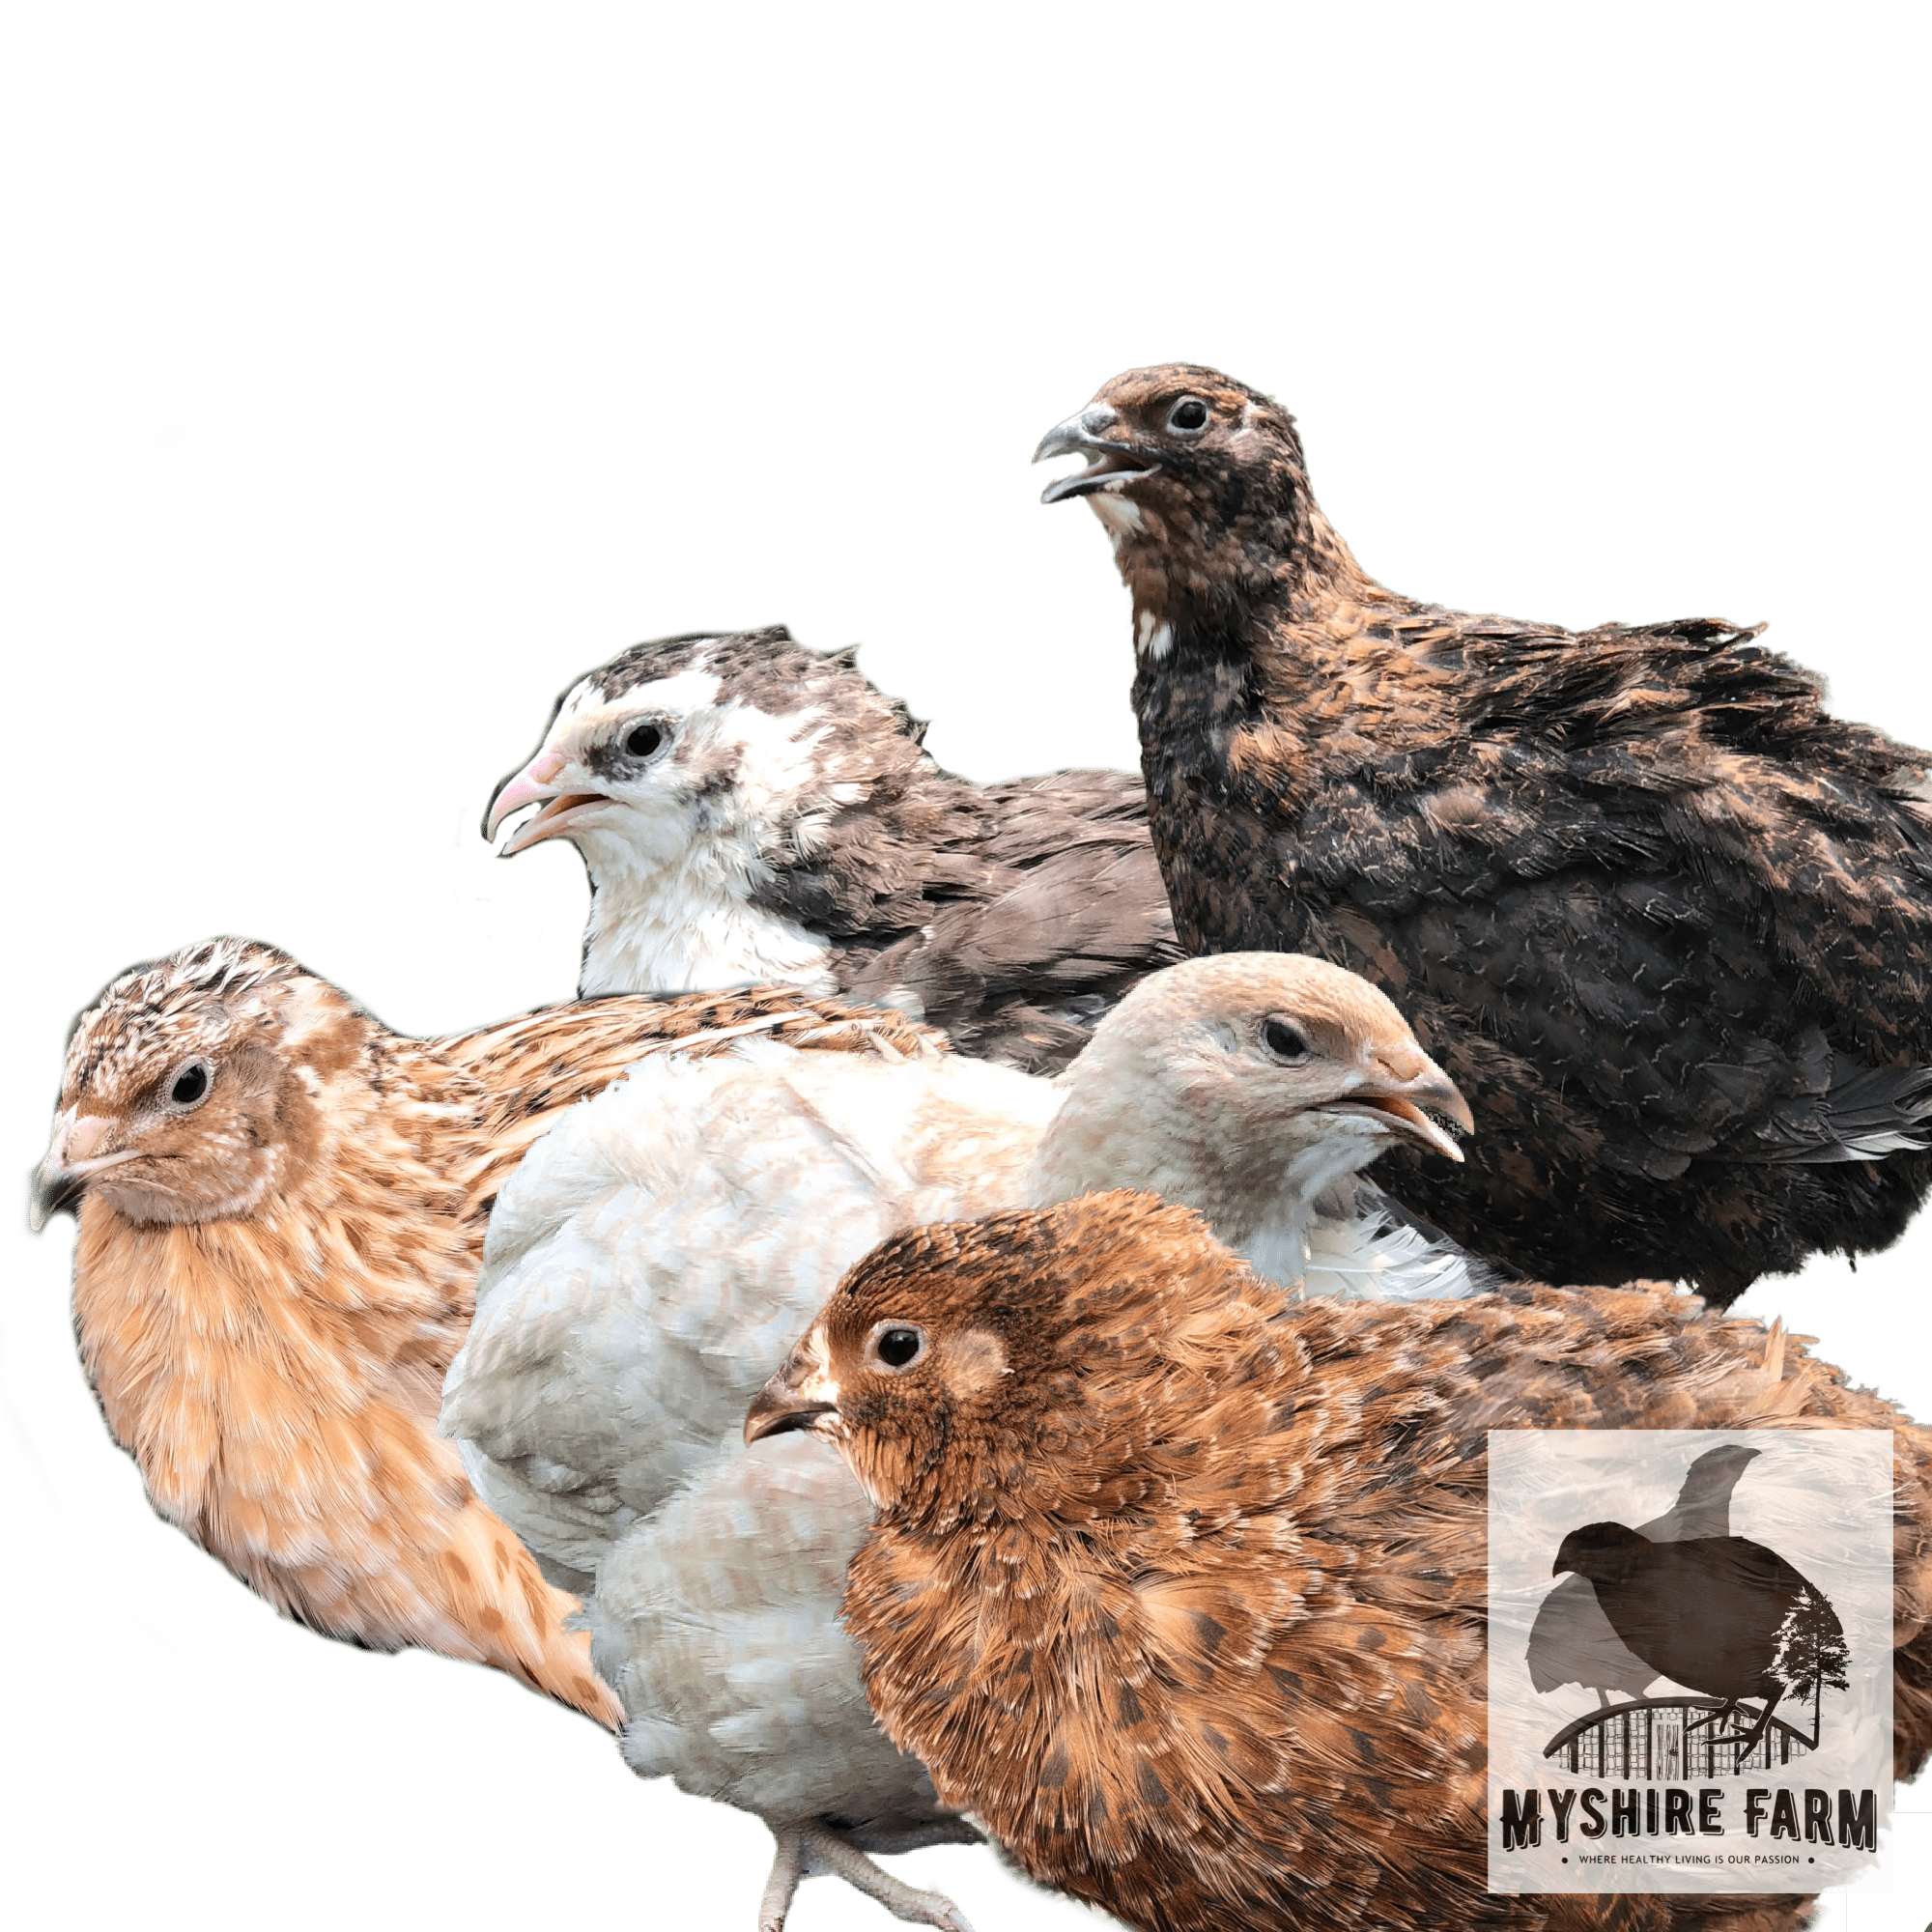 Scarlet/Range Coturnix quail hatching eggs By Myshire Farm 50 Includes Tuxedo! 